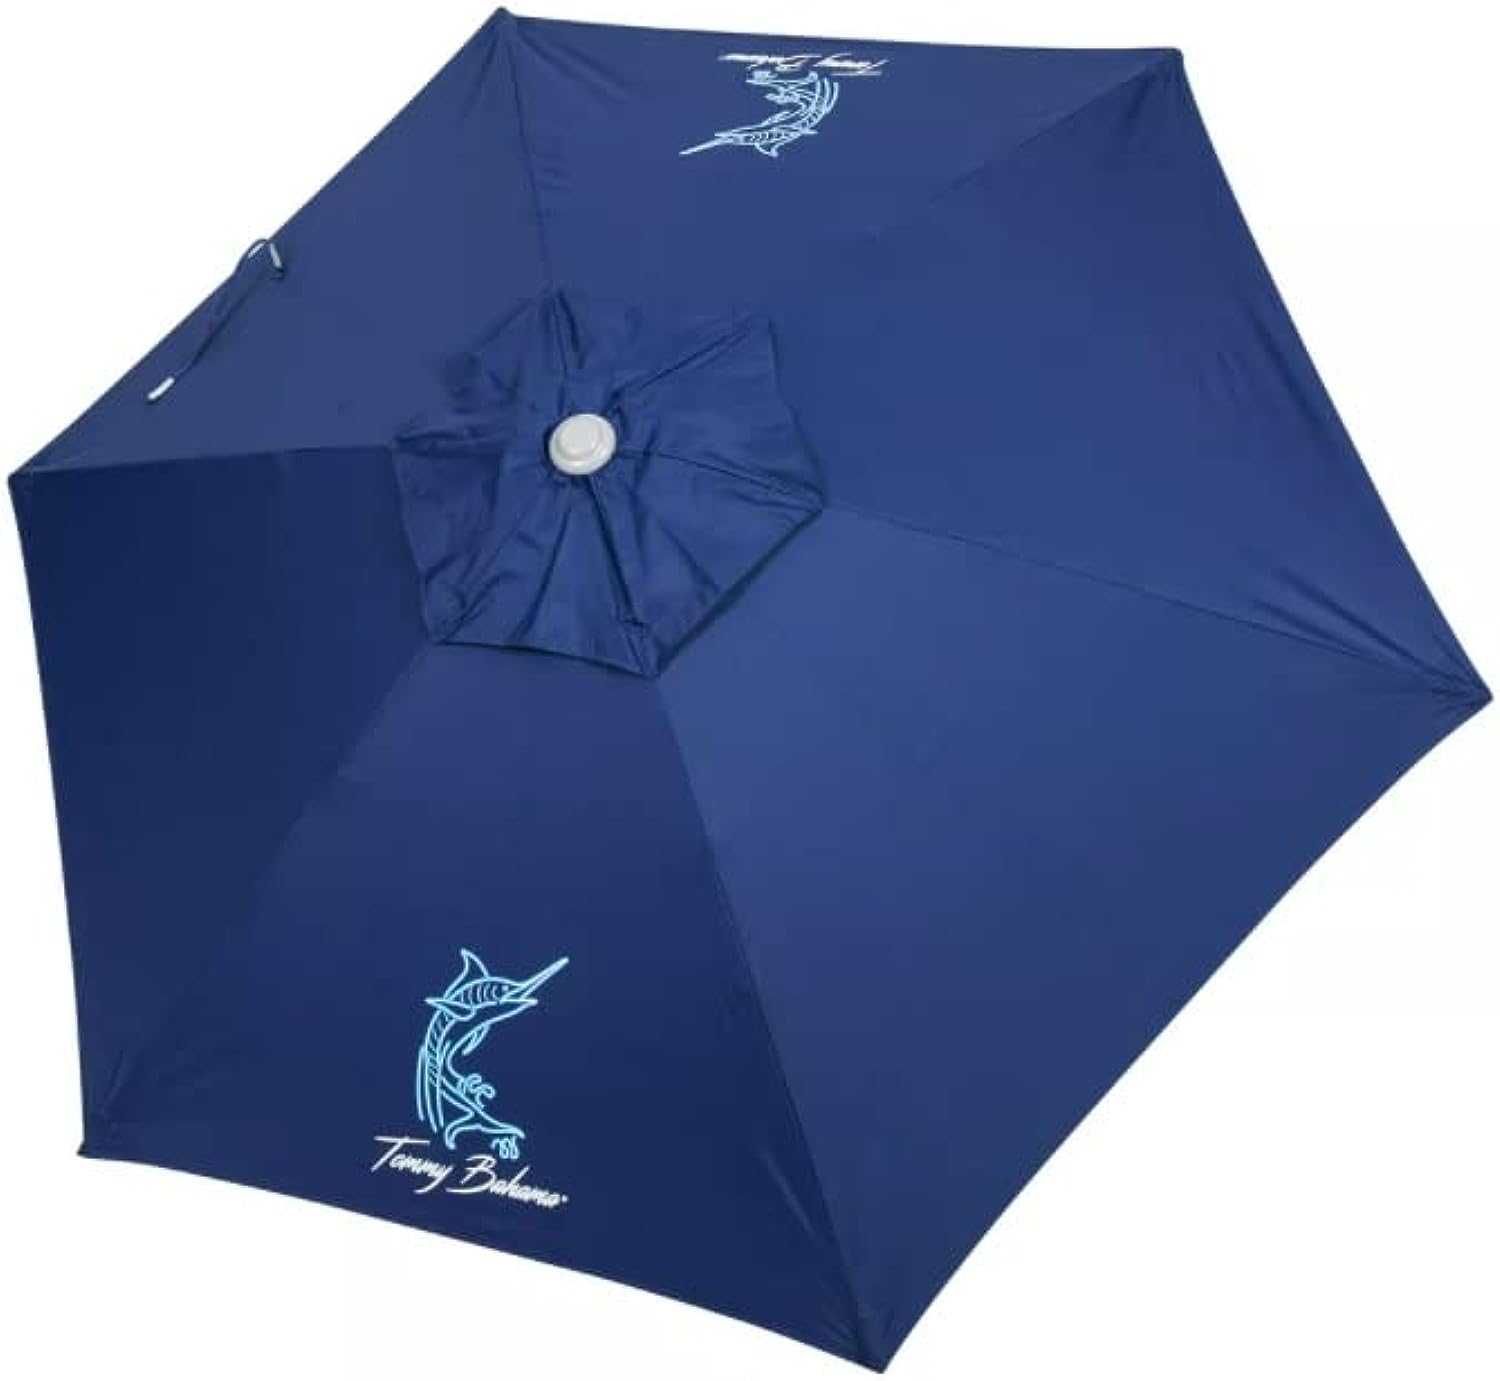 Tommy Bahama Beach Umbrella Review